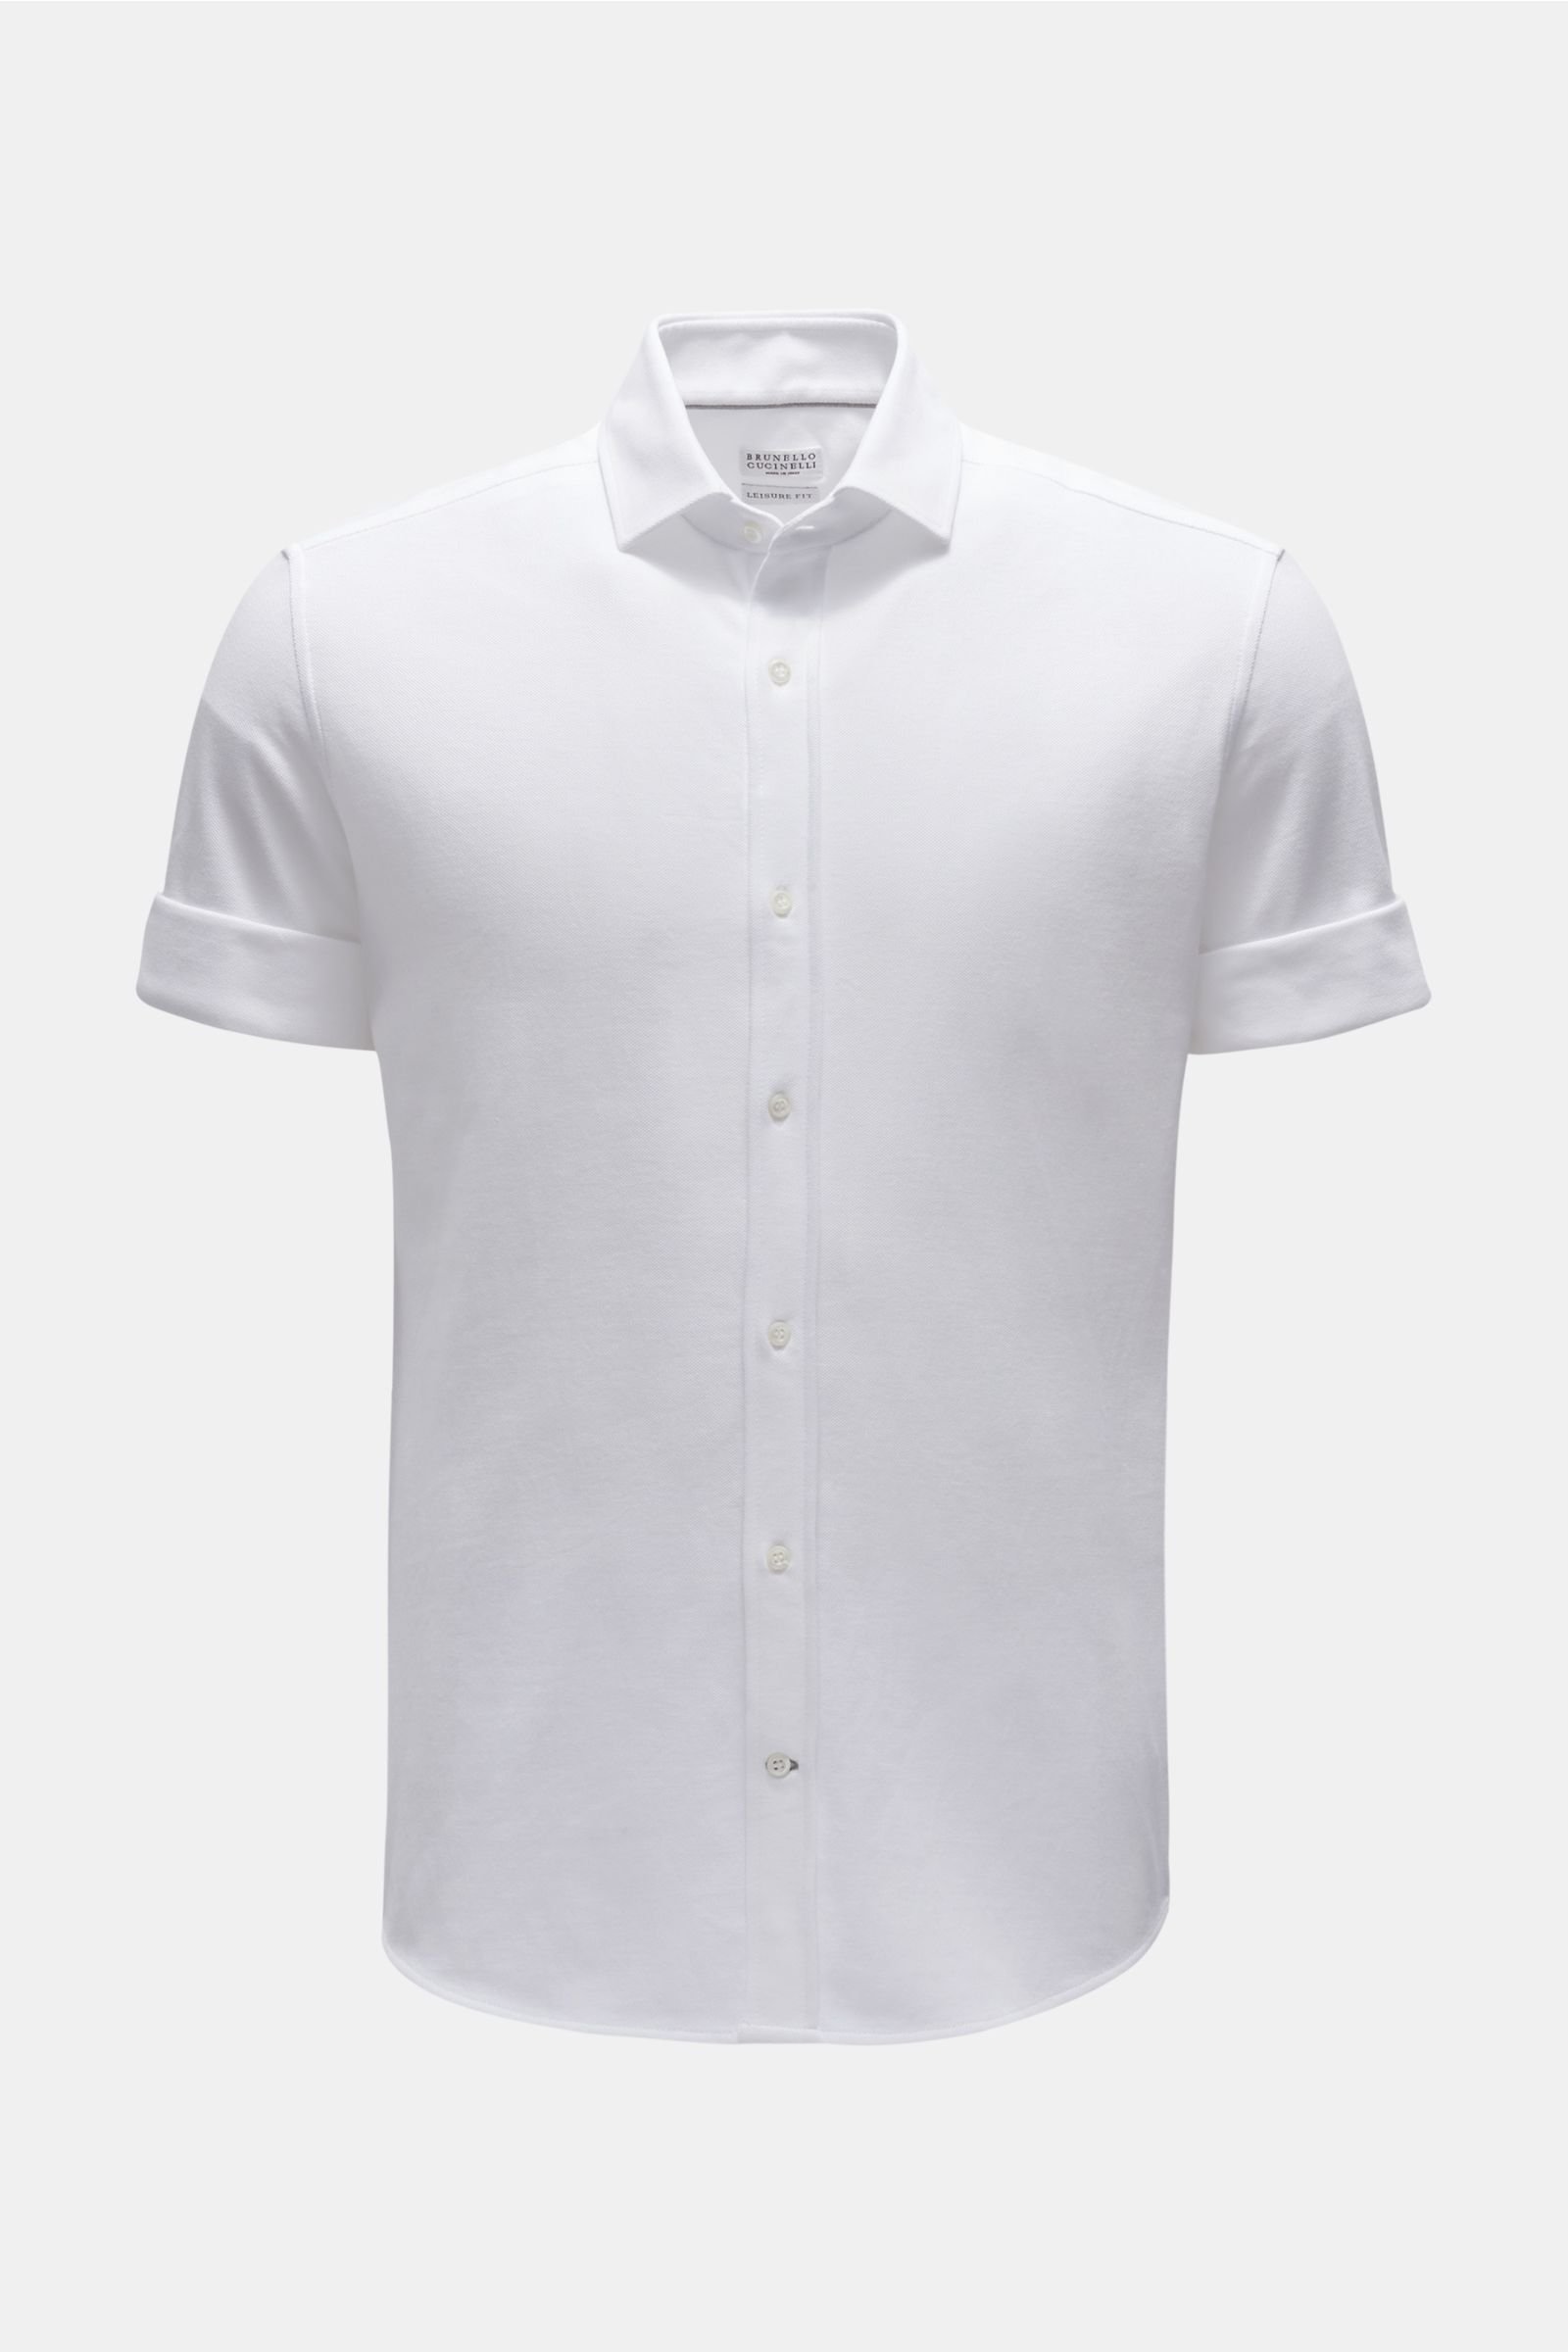 Jersey short sleeve shirt 'Leisure Fit' narrow collar white